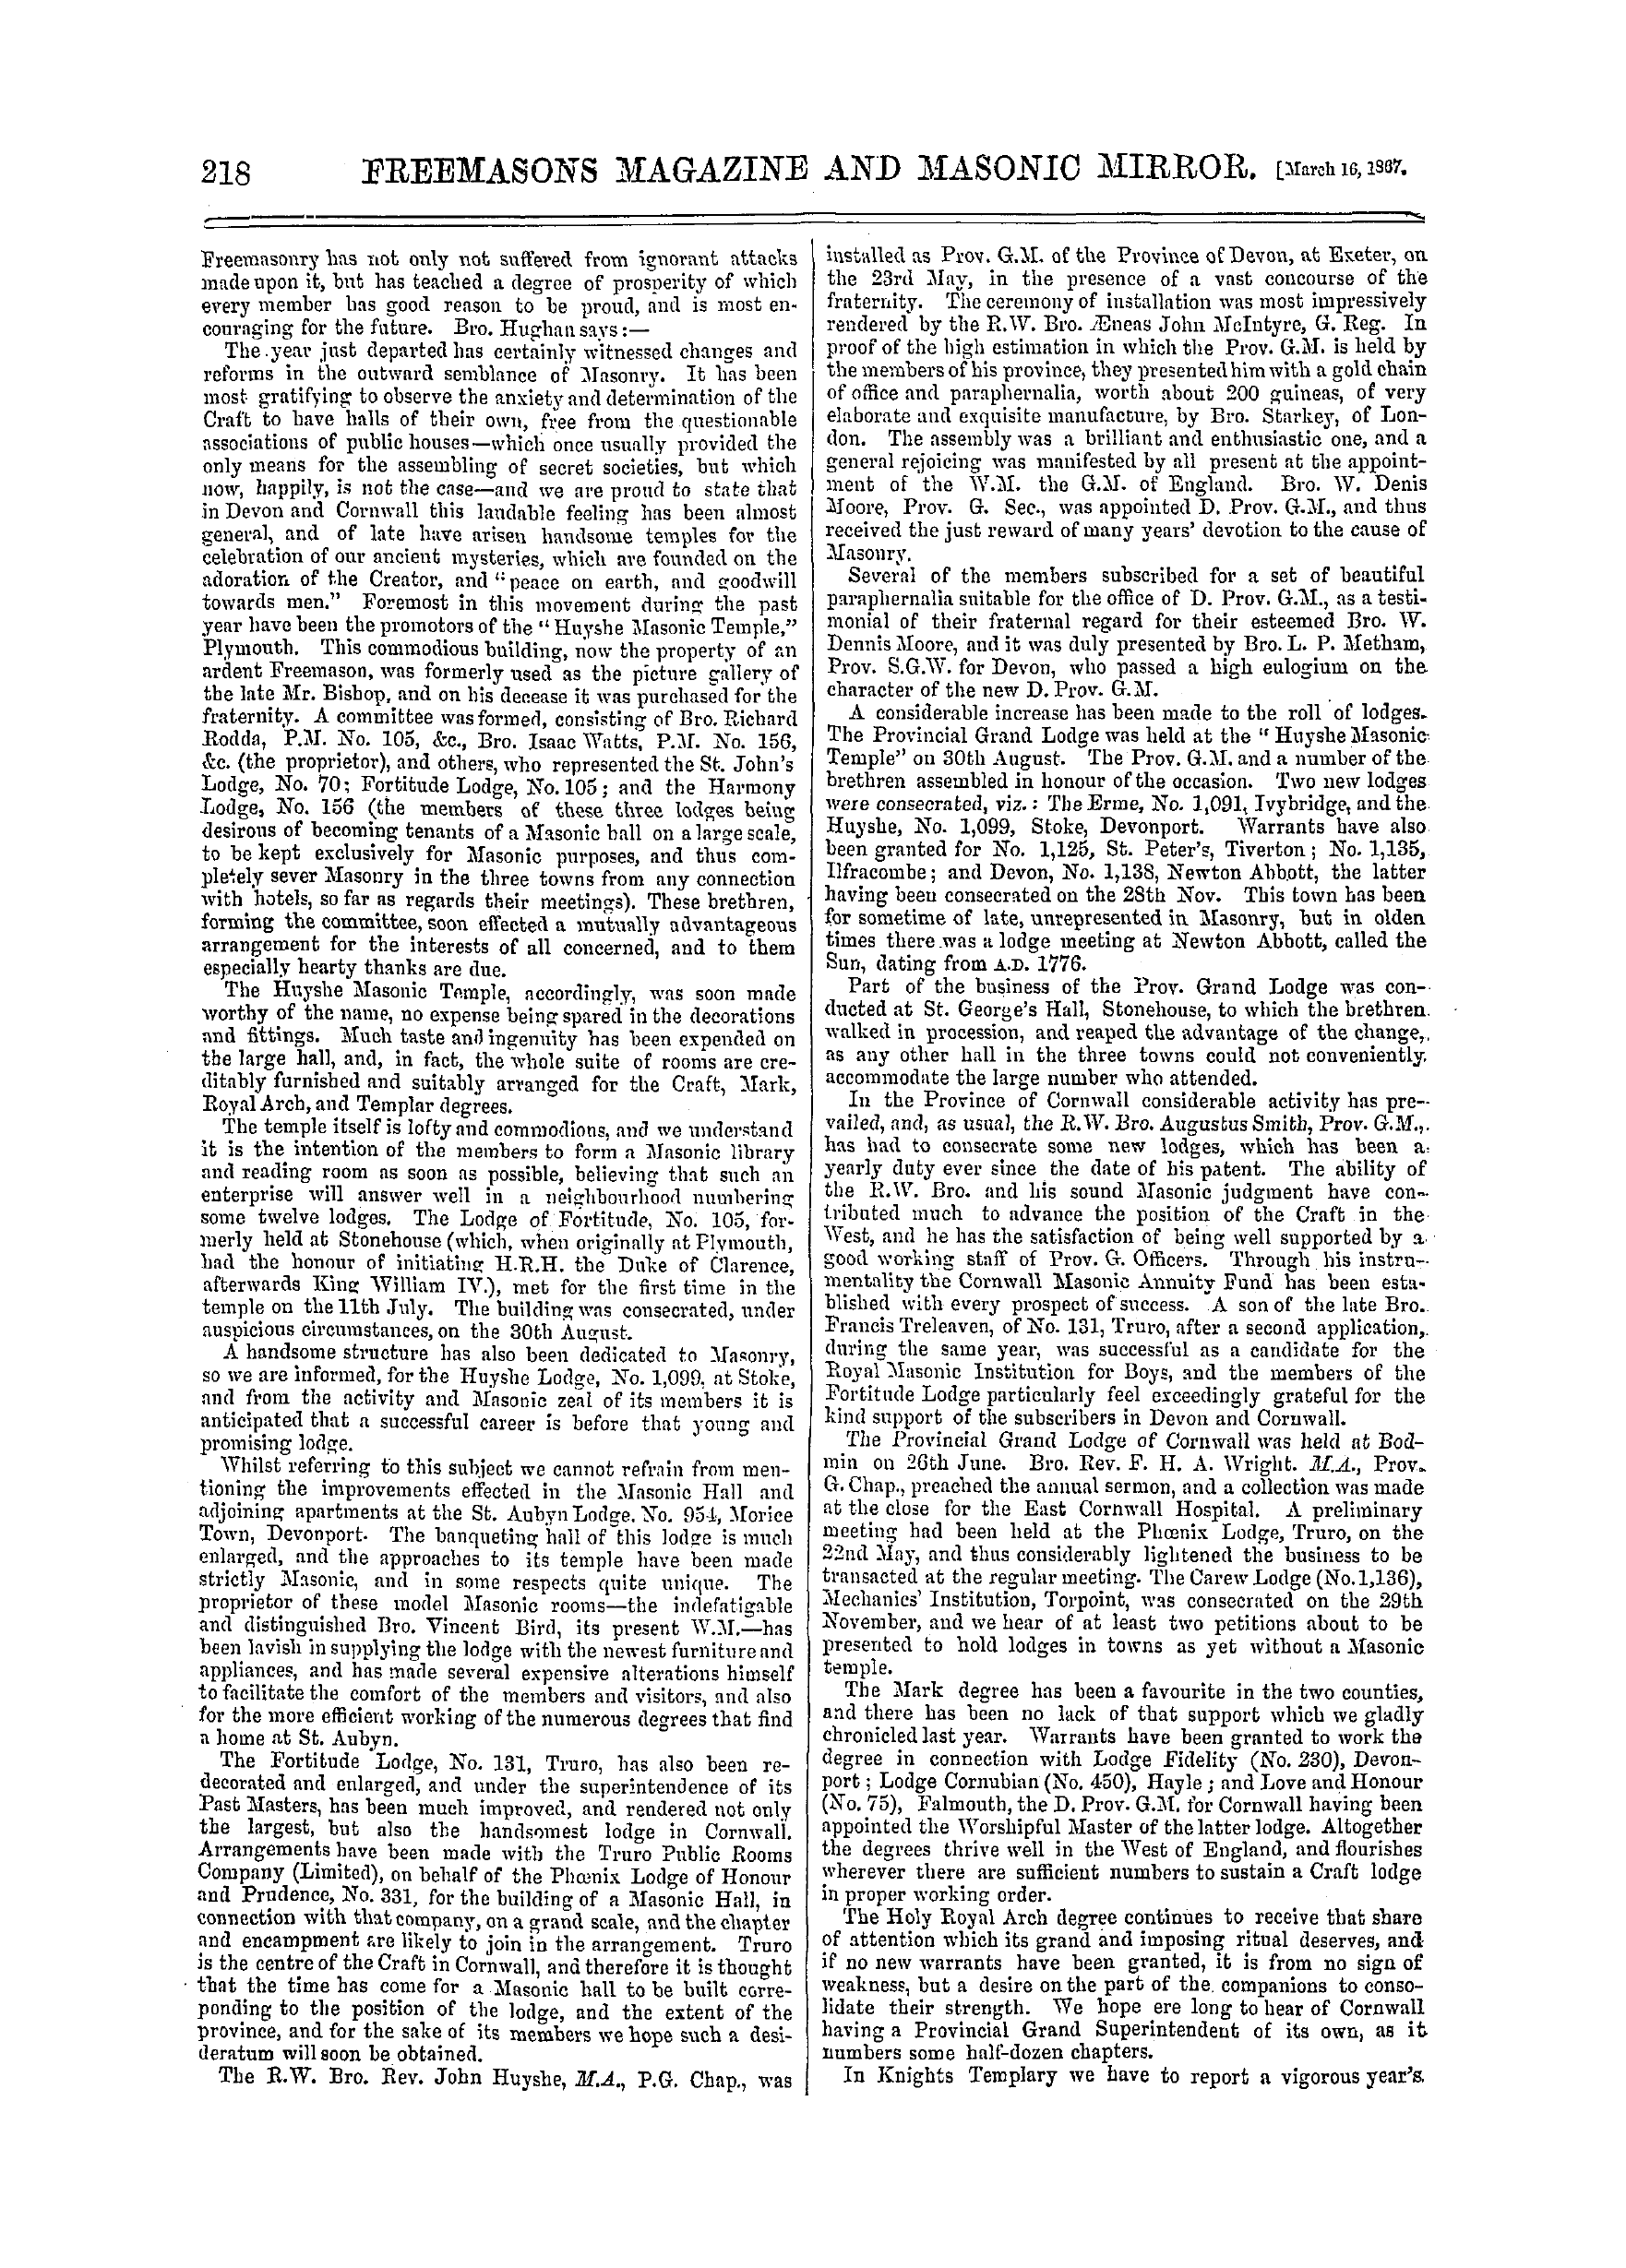 The Freemasons' Monthly Magazine: 1867-03-16 - Reviews.